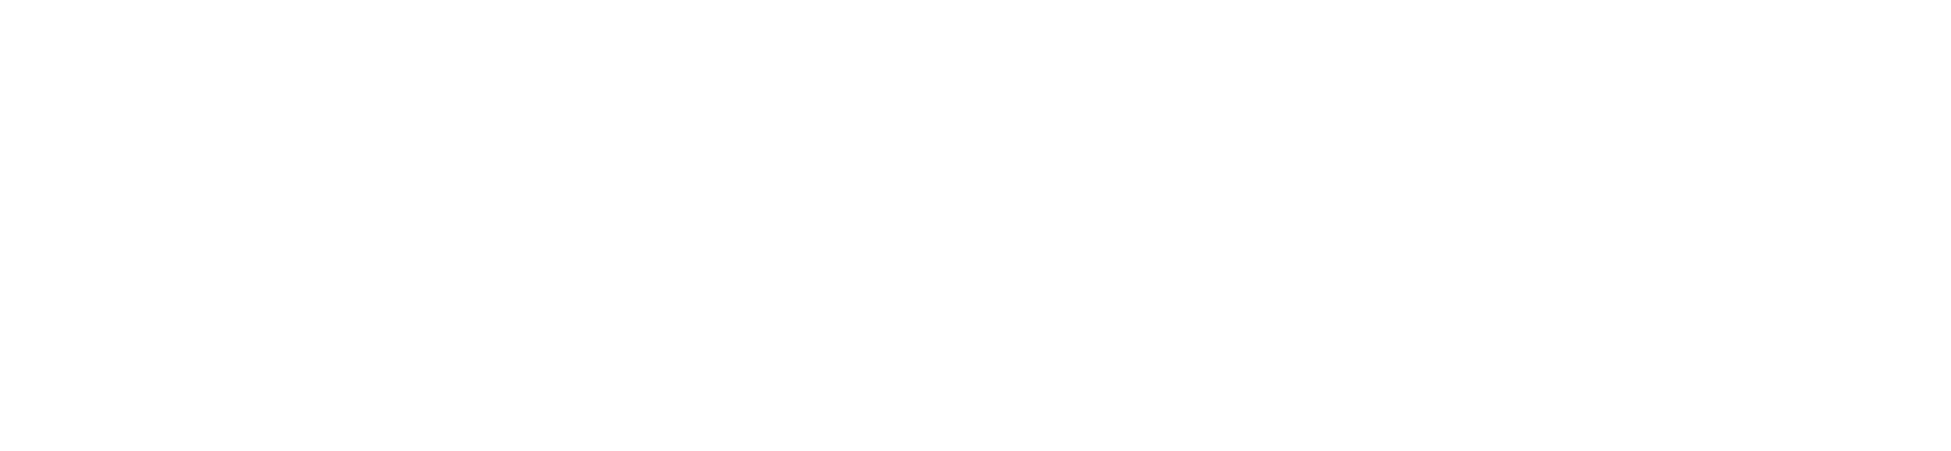 Woodstock Advisor Marketing Group Inc.